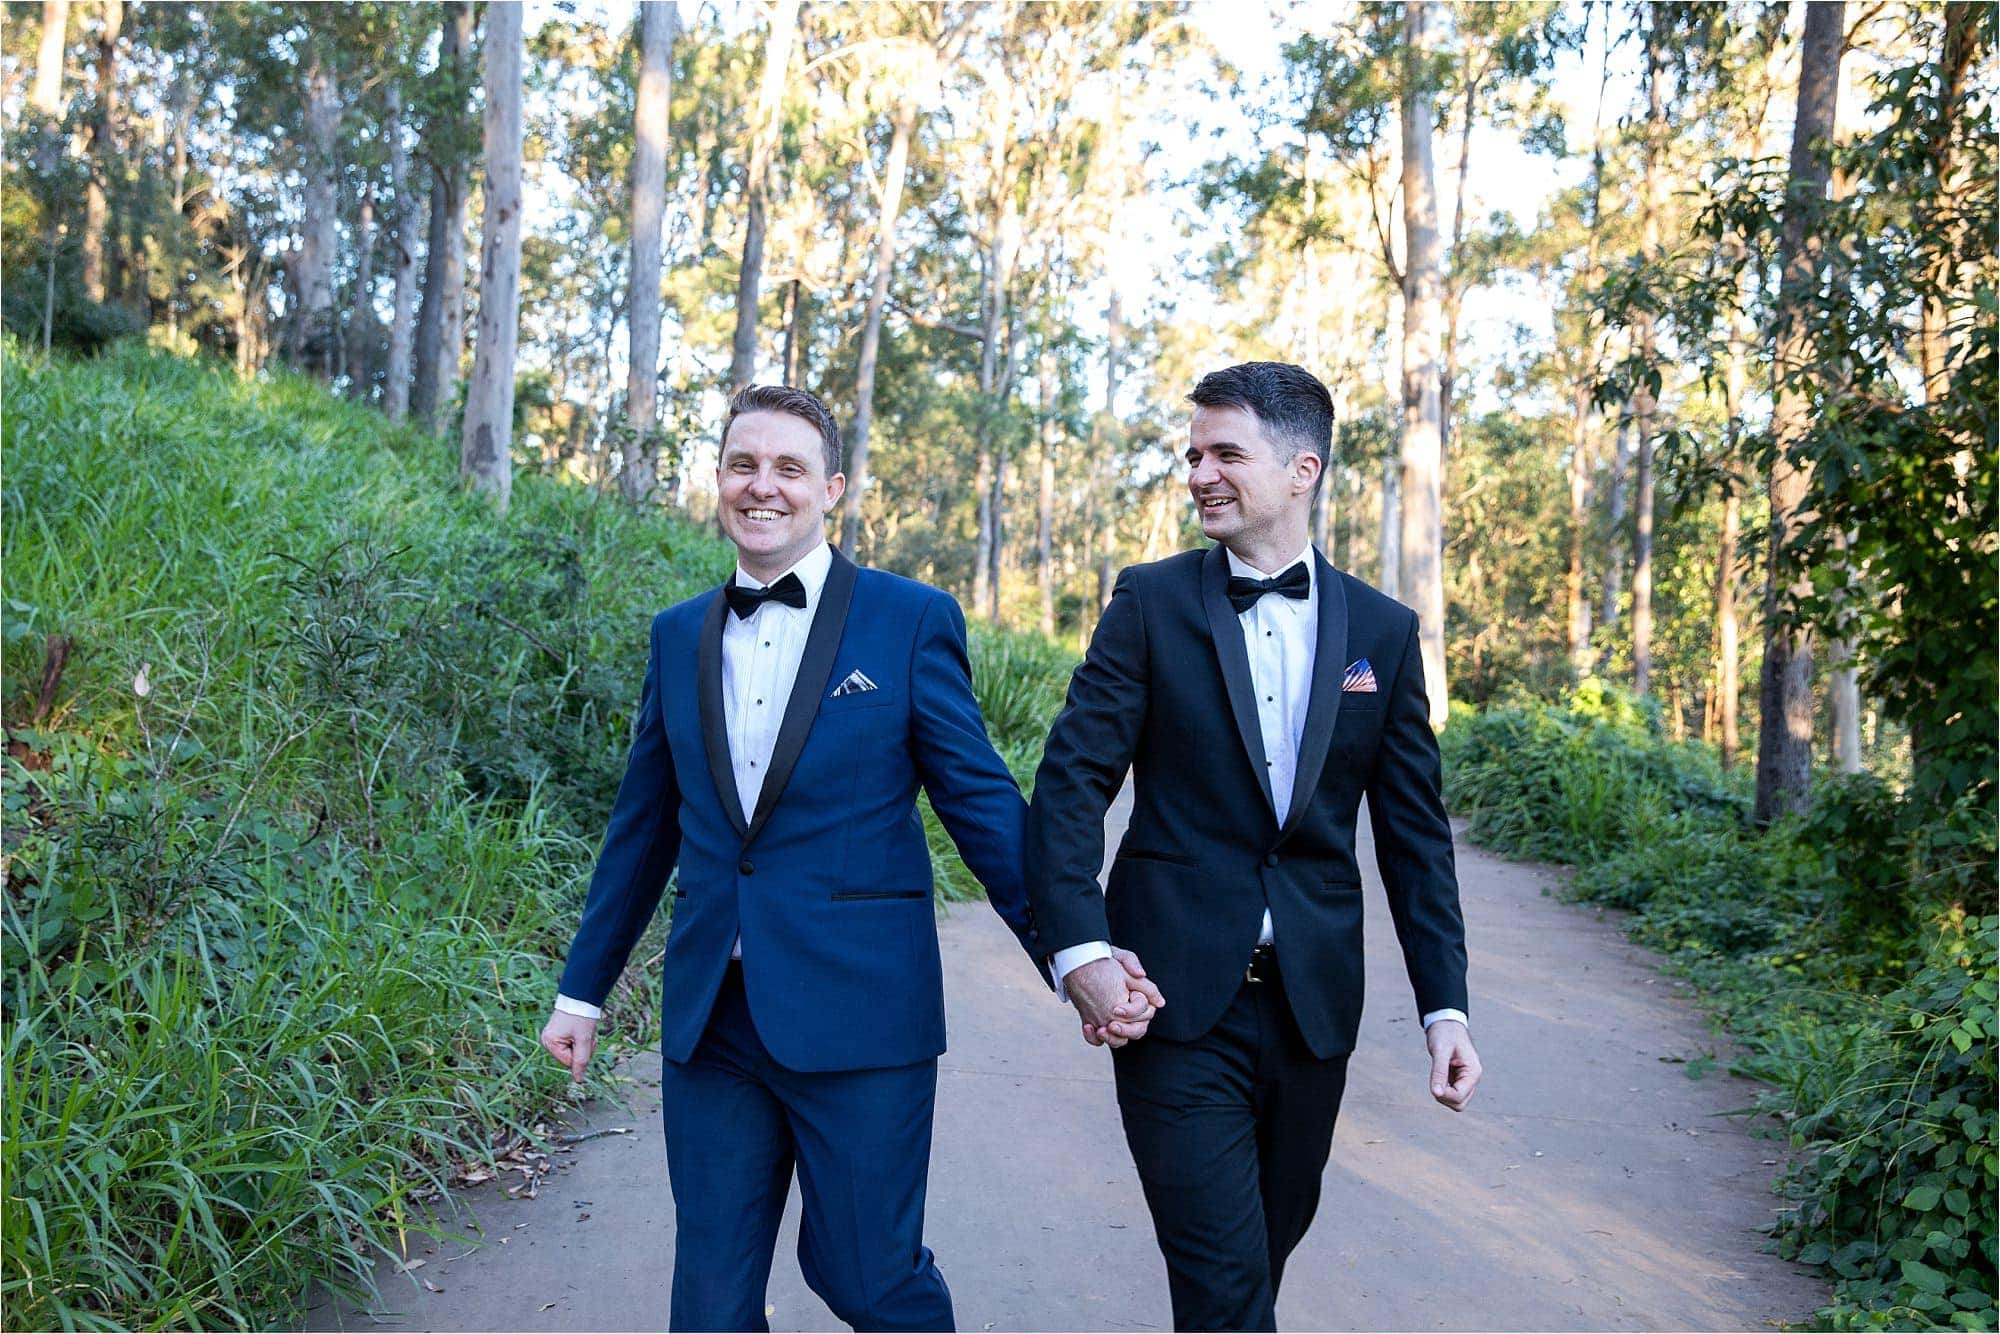 Walkabout Creek Wedding by Mooi Photography, Gold Coast wedding photographer.